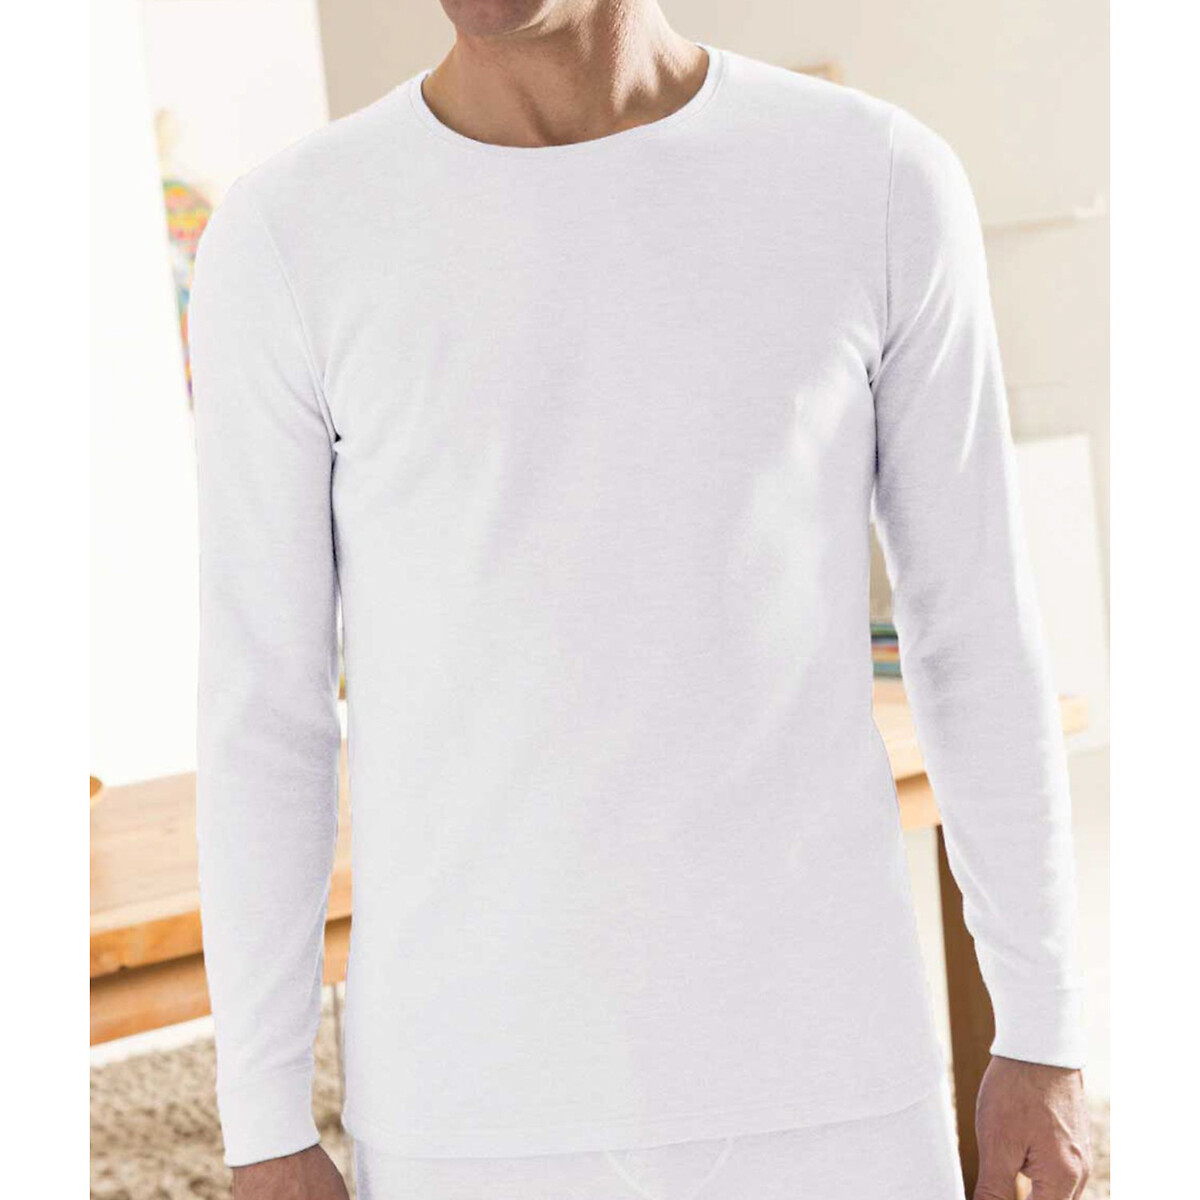 Damart Thermal Soft Warmth Long Sleeved T-Shirt